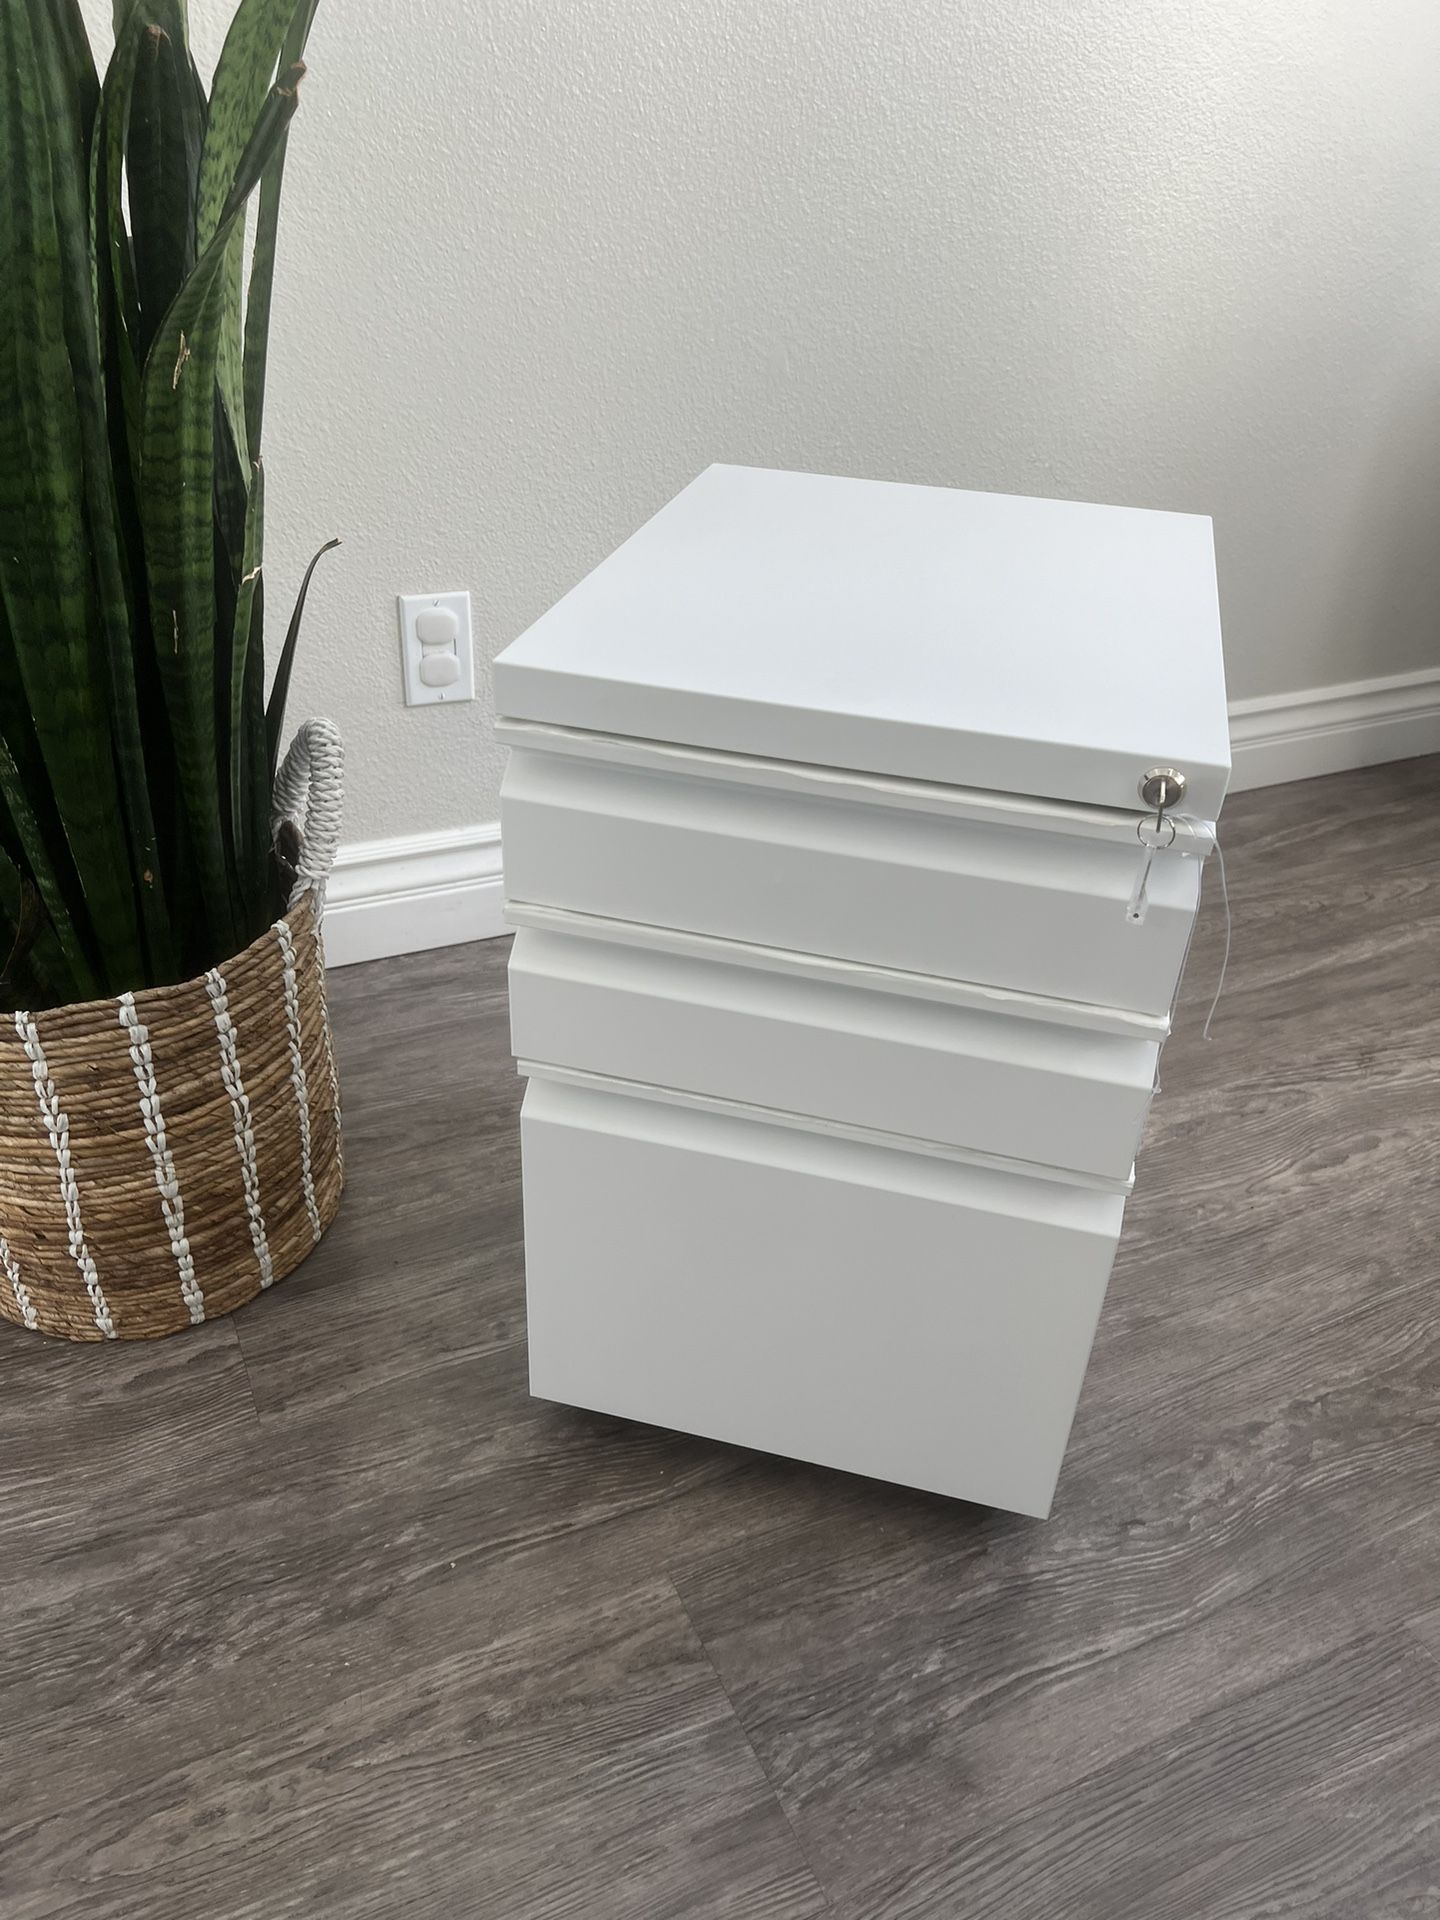 3 Drawer Mobile File Cabinet, Filing Cabinet Home Office for Letter, Legal Size, Fully Assembled Under Desk File Cabinet, White